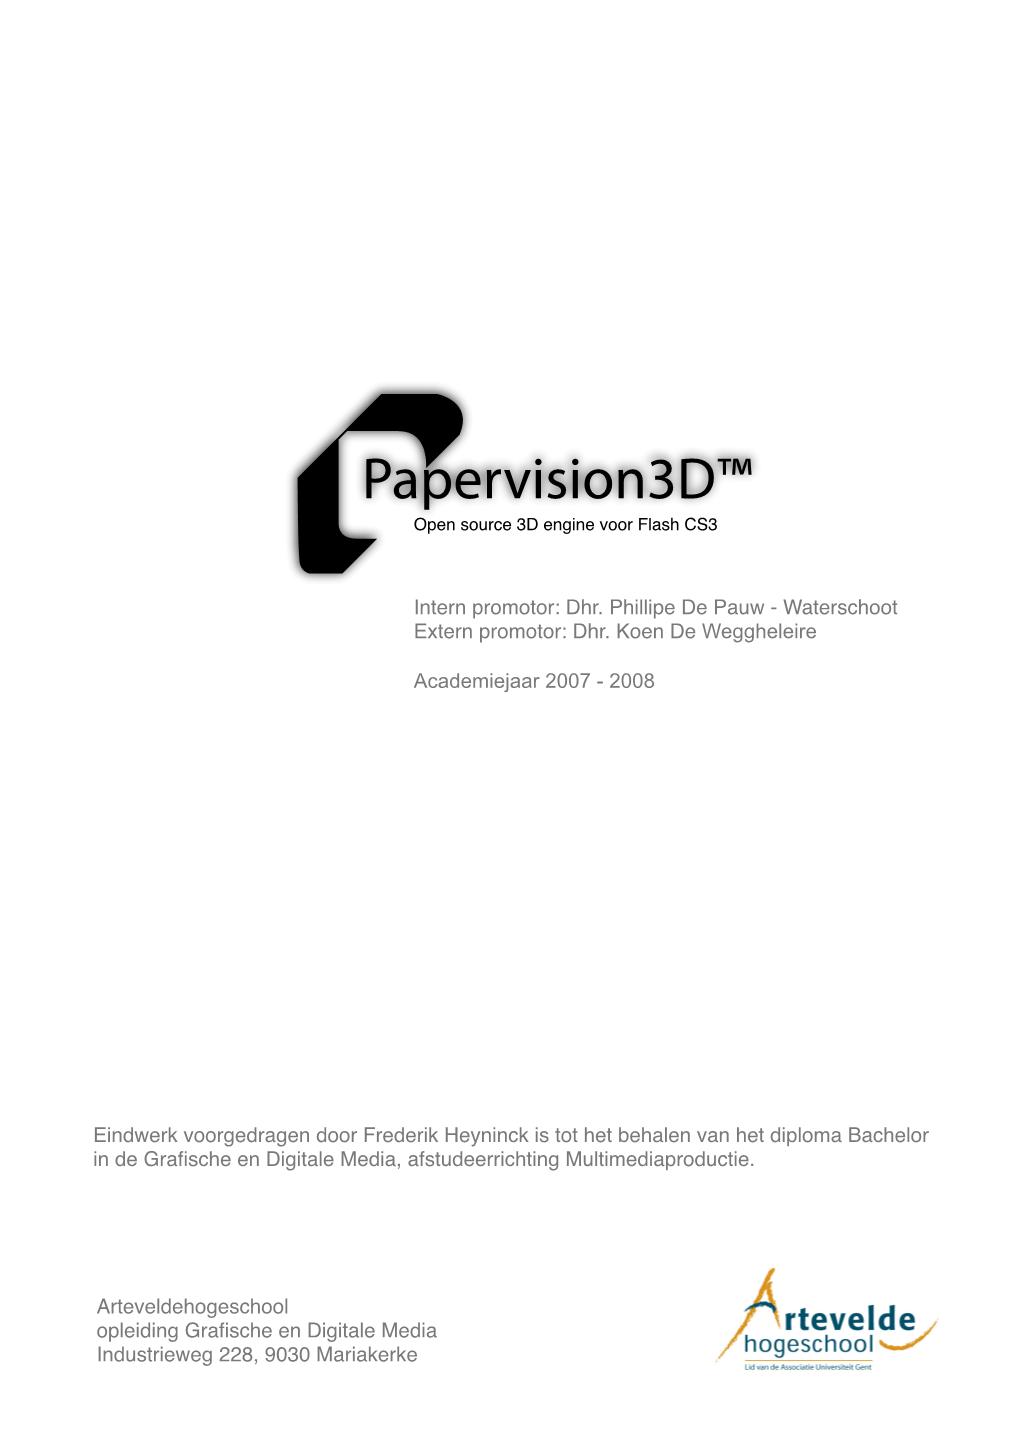 Papervision3d™ Open Source 3D Engine Voor Flash CS3